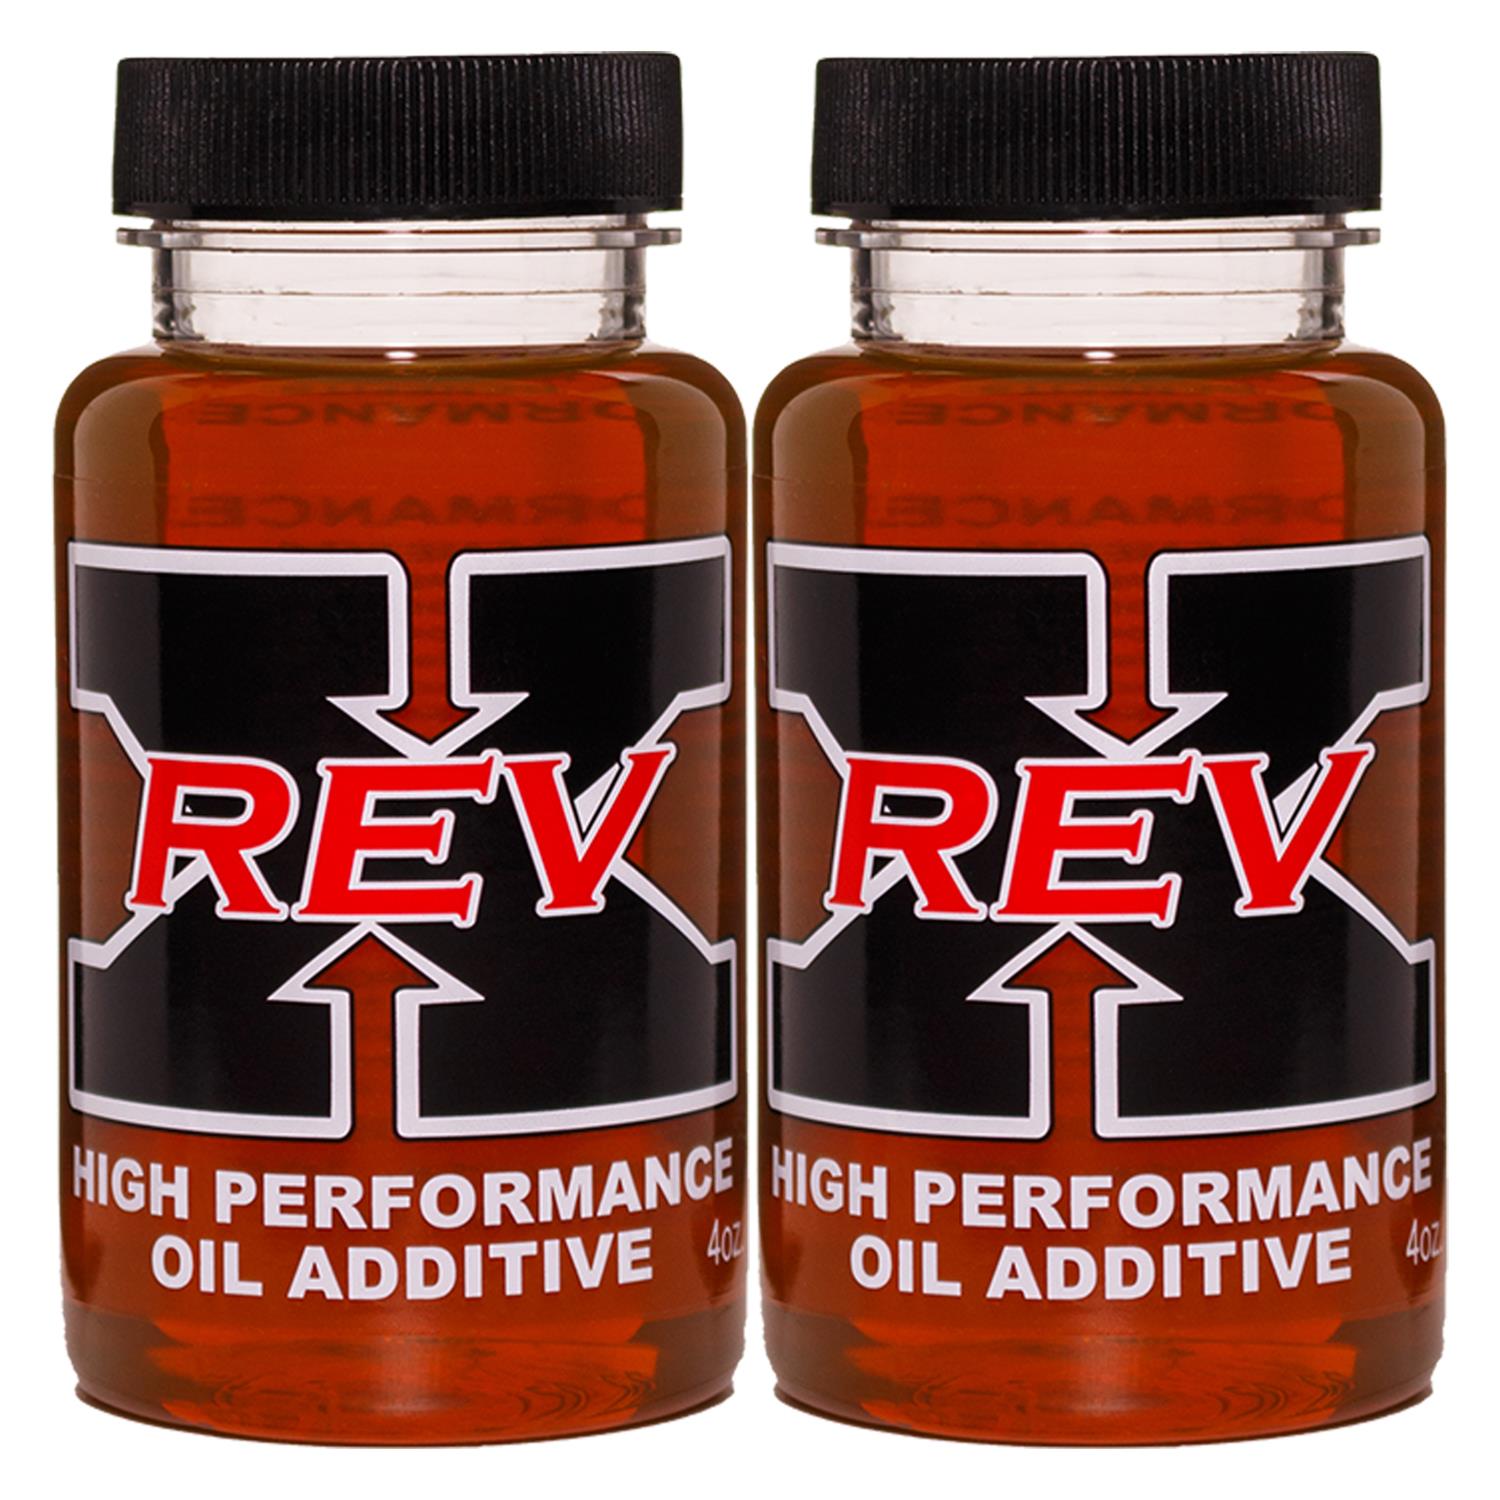 High-Performance Oil Additives